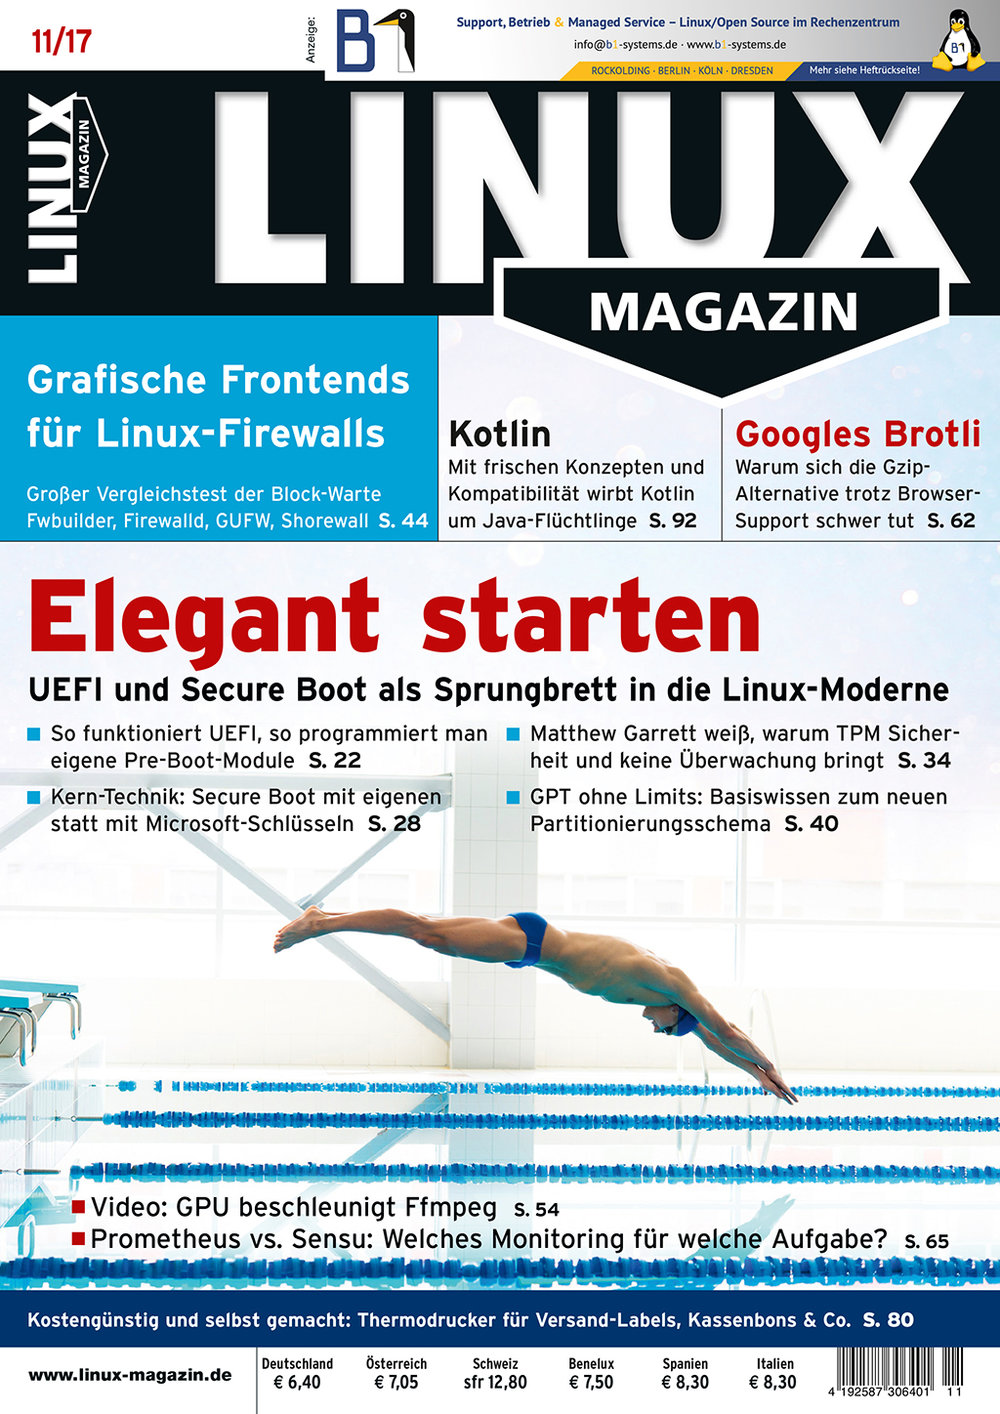 Linux Magazin ePaper 11/2017